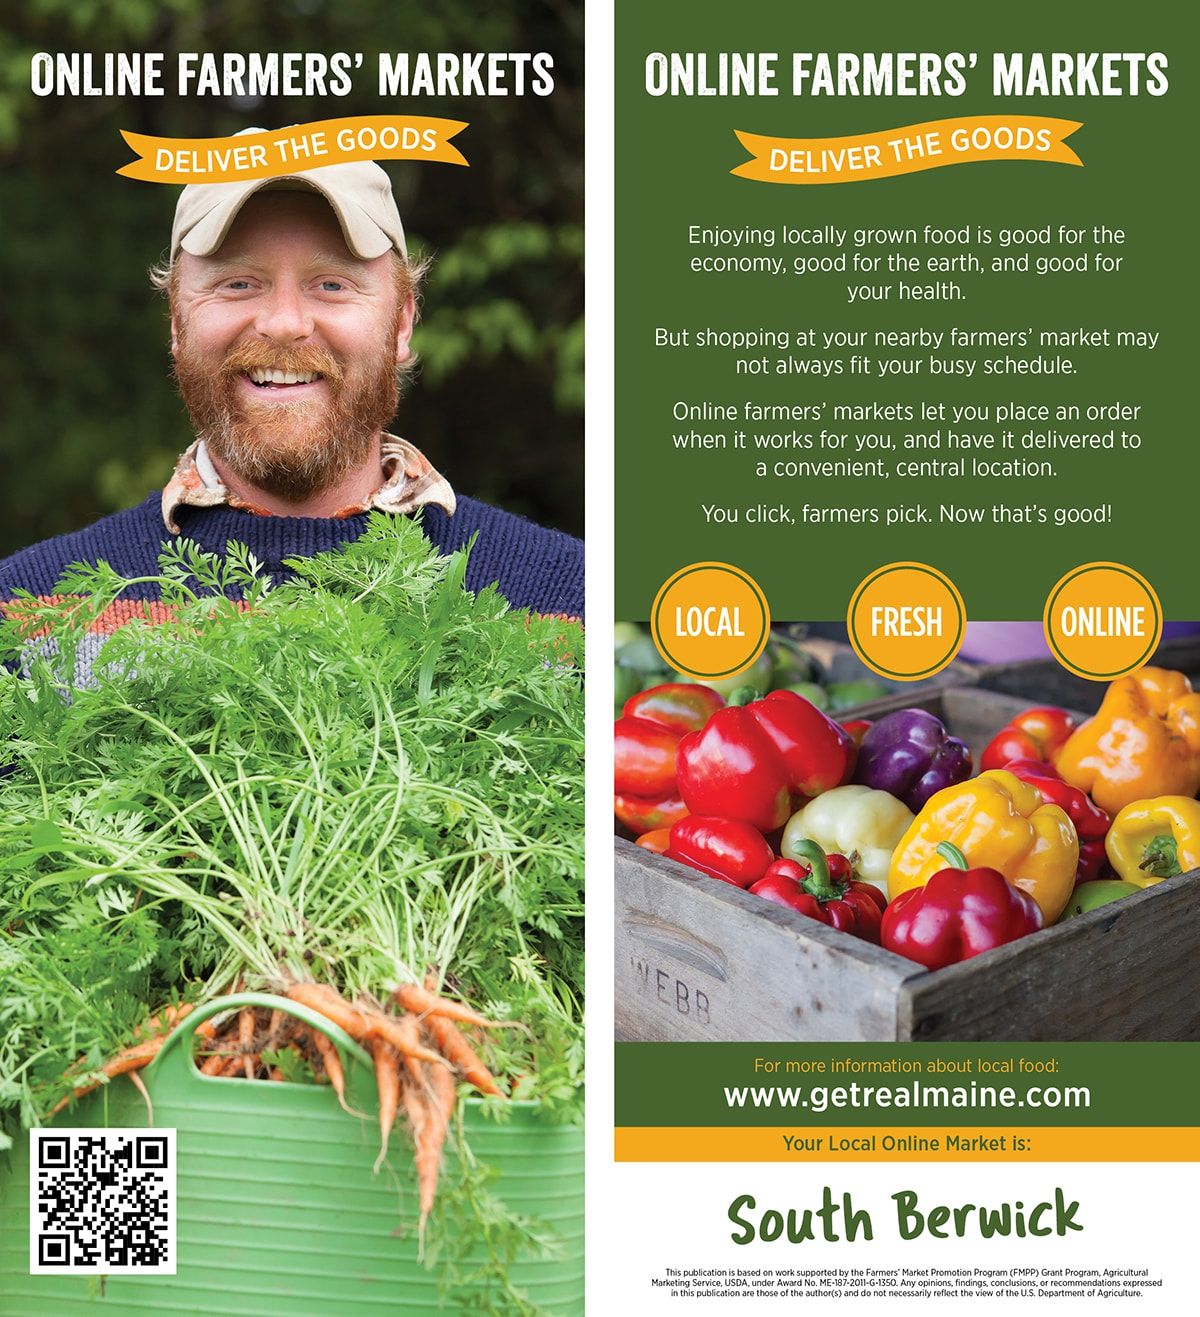 Online Farmers Markets Rackcard 1 Sw